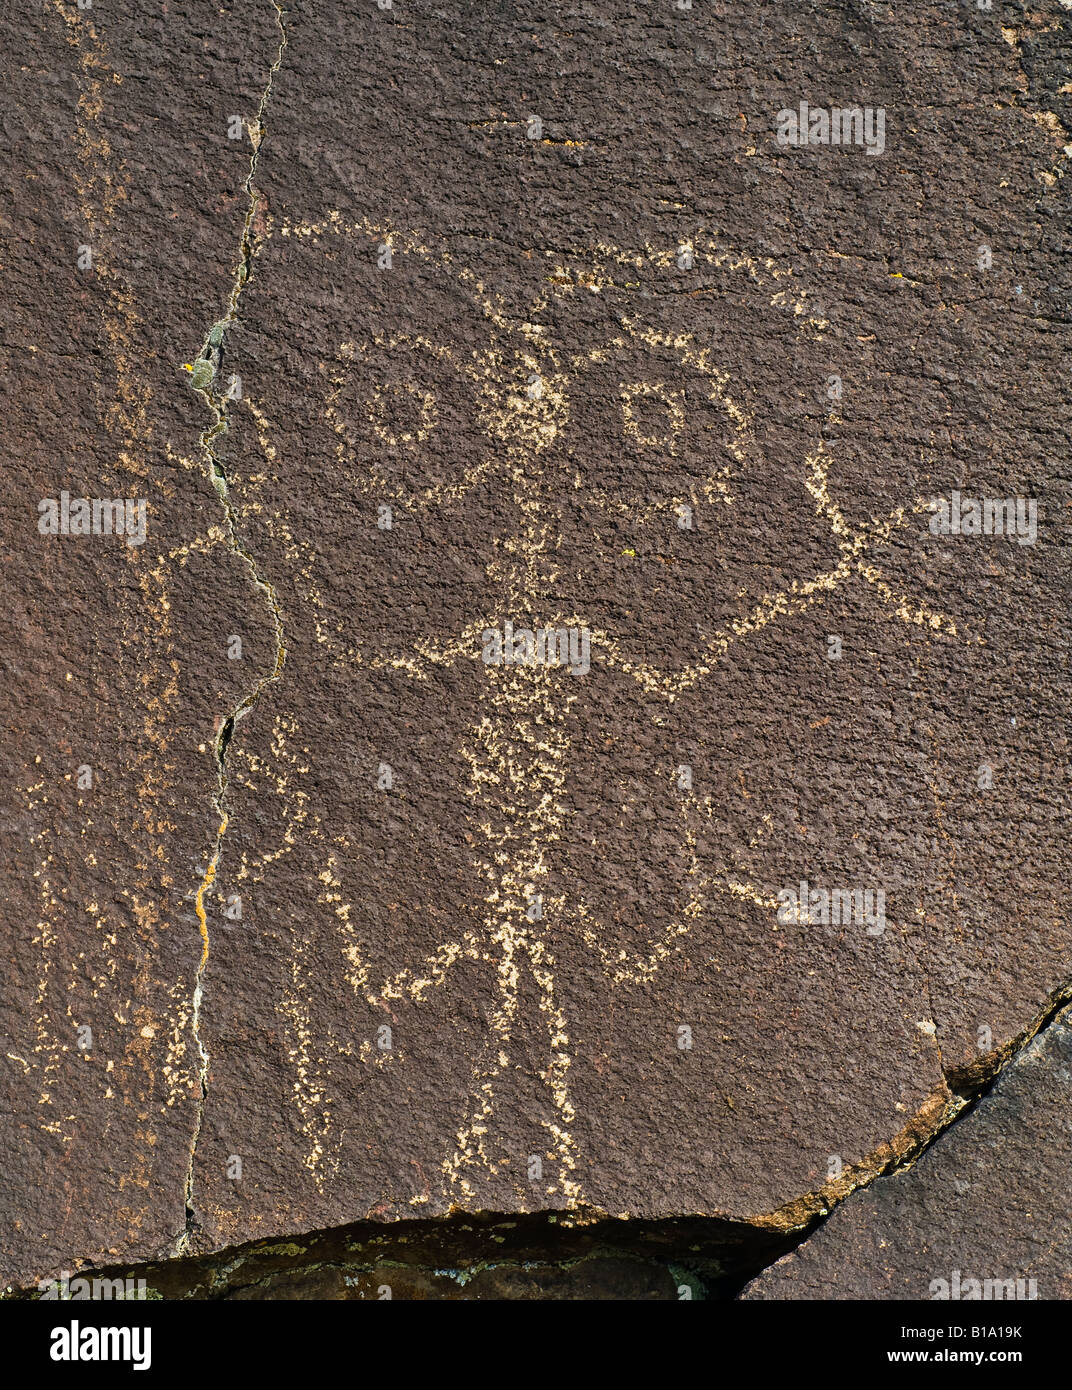 Native American pictograph rock carvings at Petroglyph Lake Hart Mountain National Antelope Refuge southeastern Oregon Stock Photo